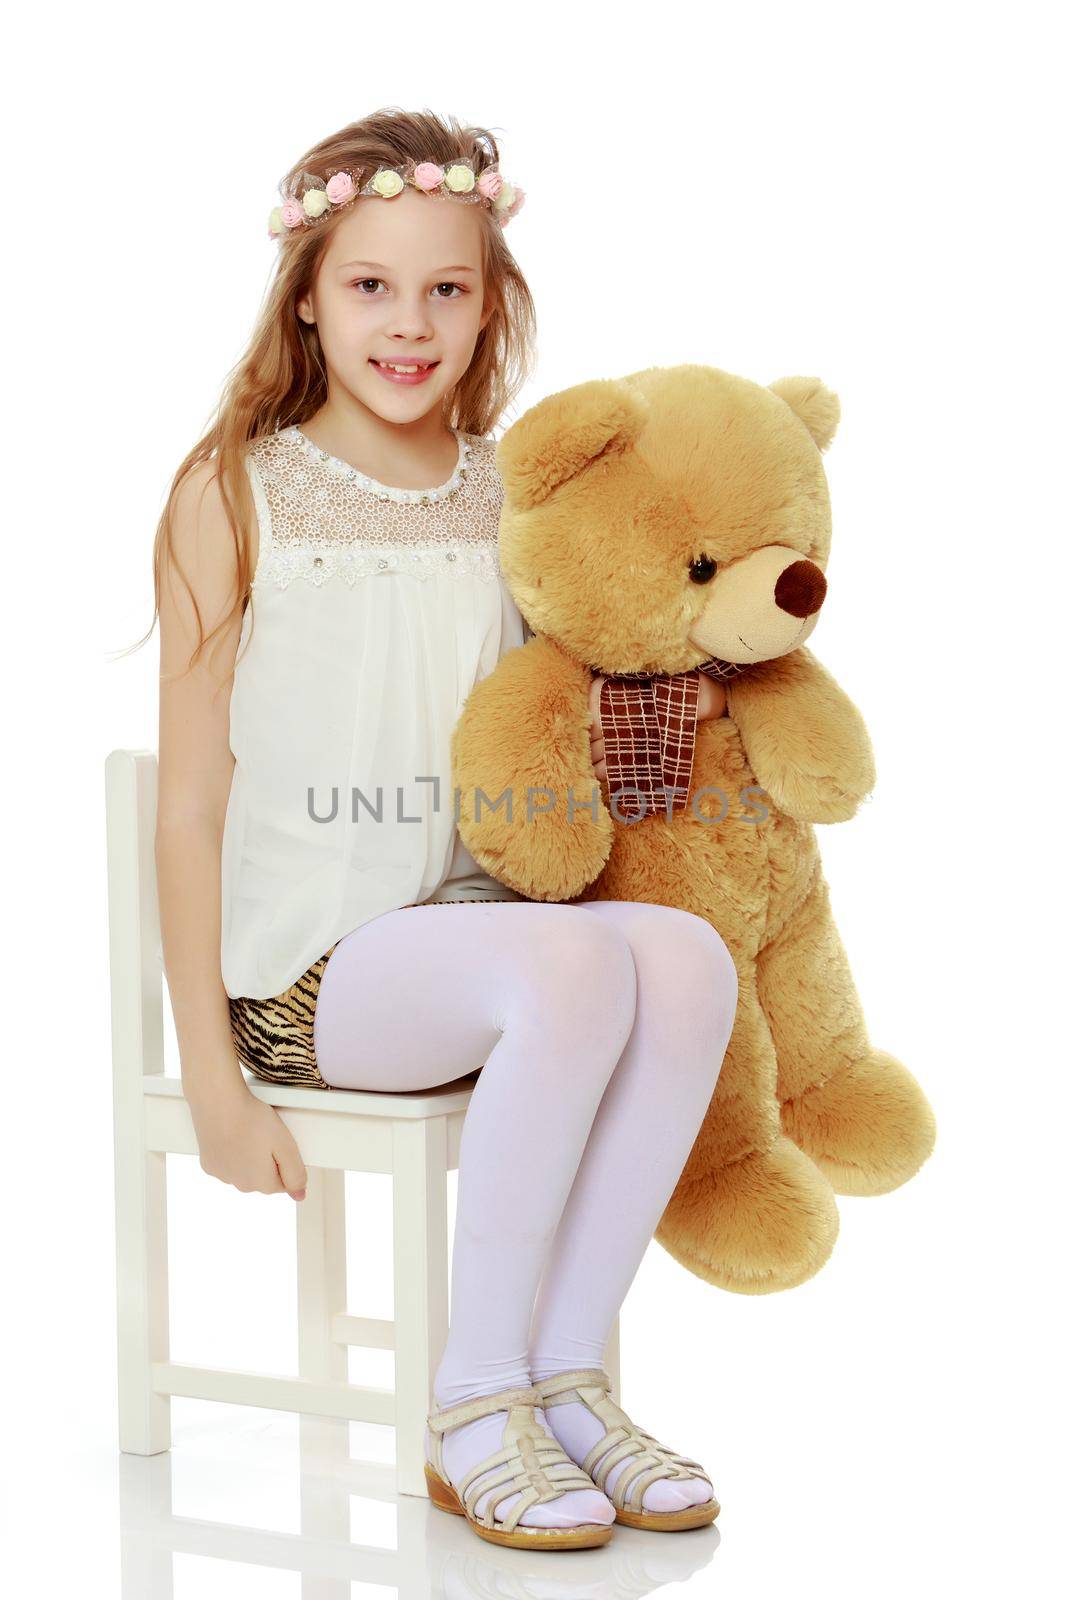 Little girl with teddy bear by kolesnikov_studio